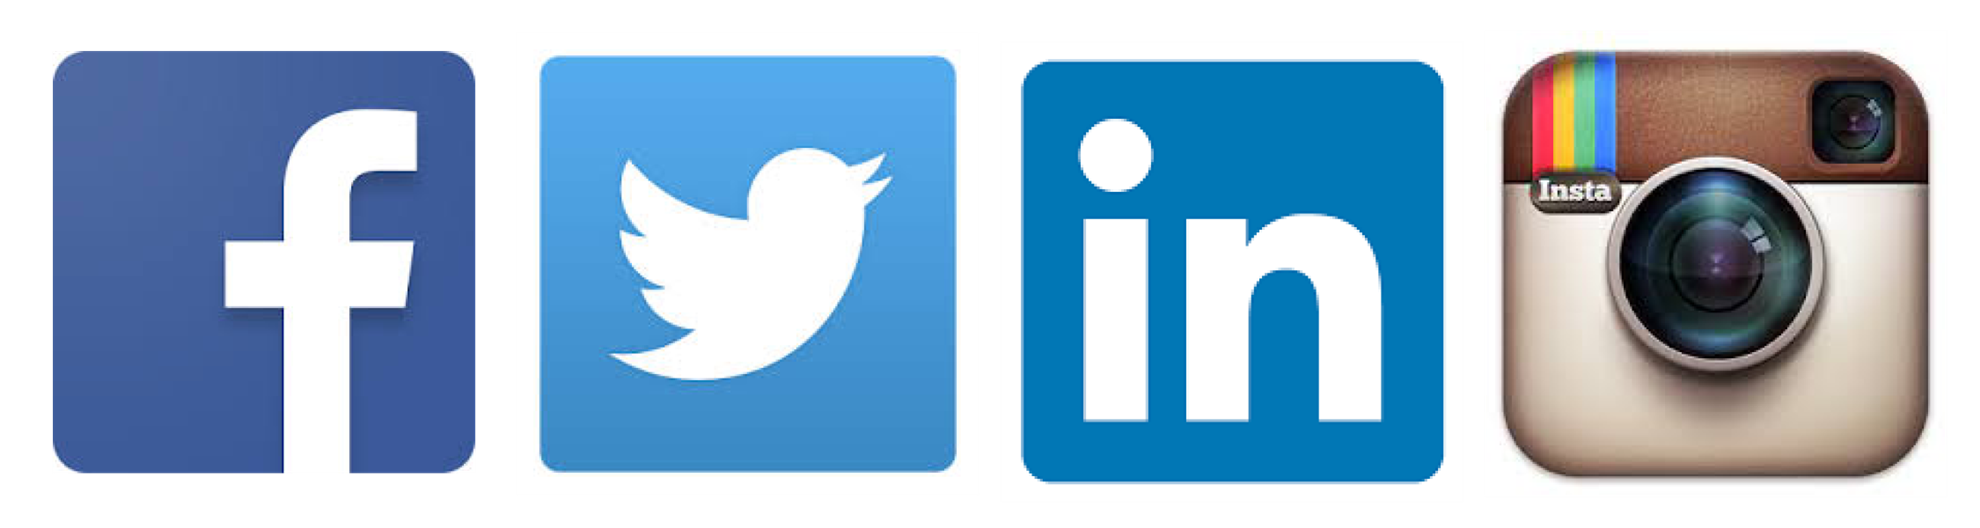 FaceBook. Twitter, LinkedIn and Instagram logos. 